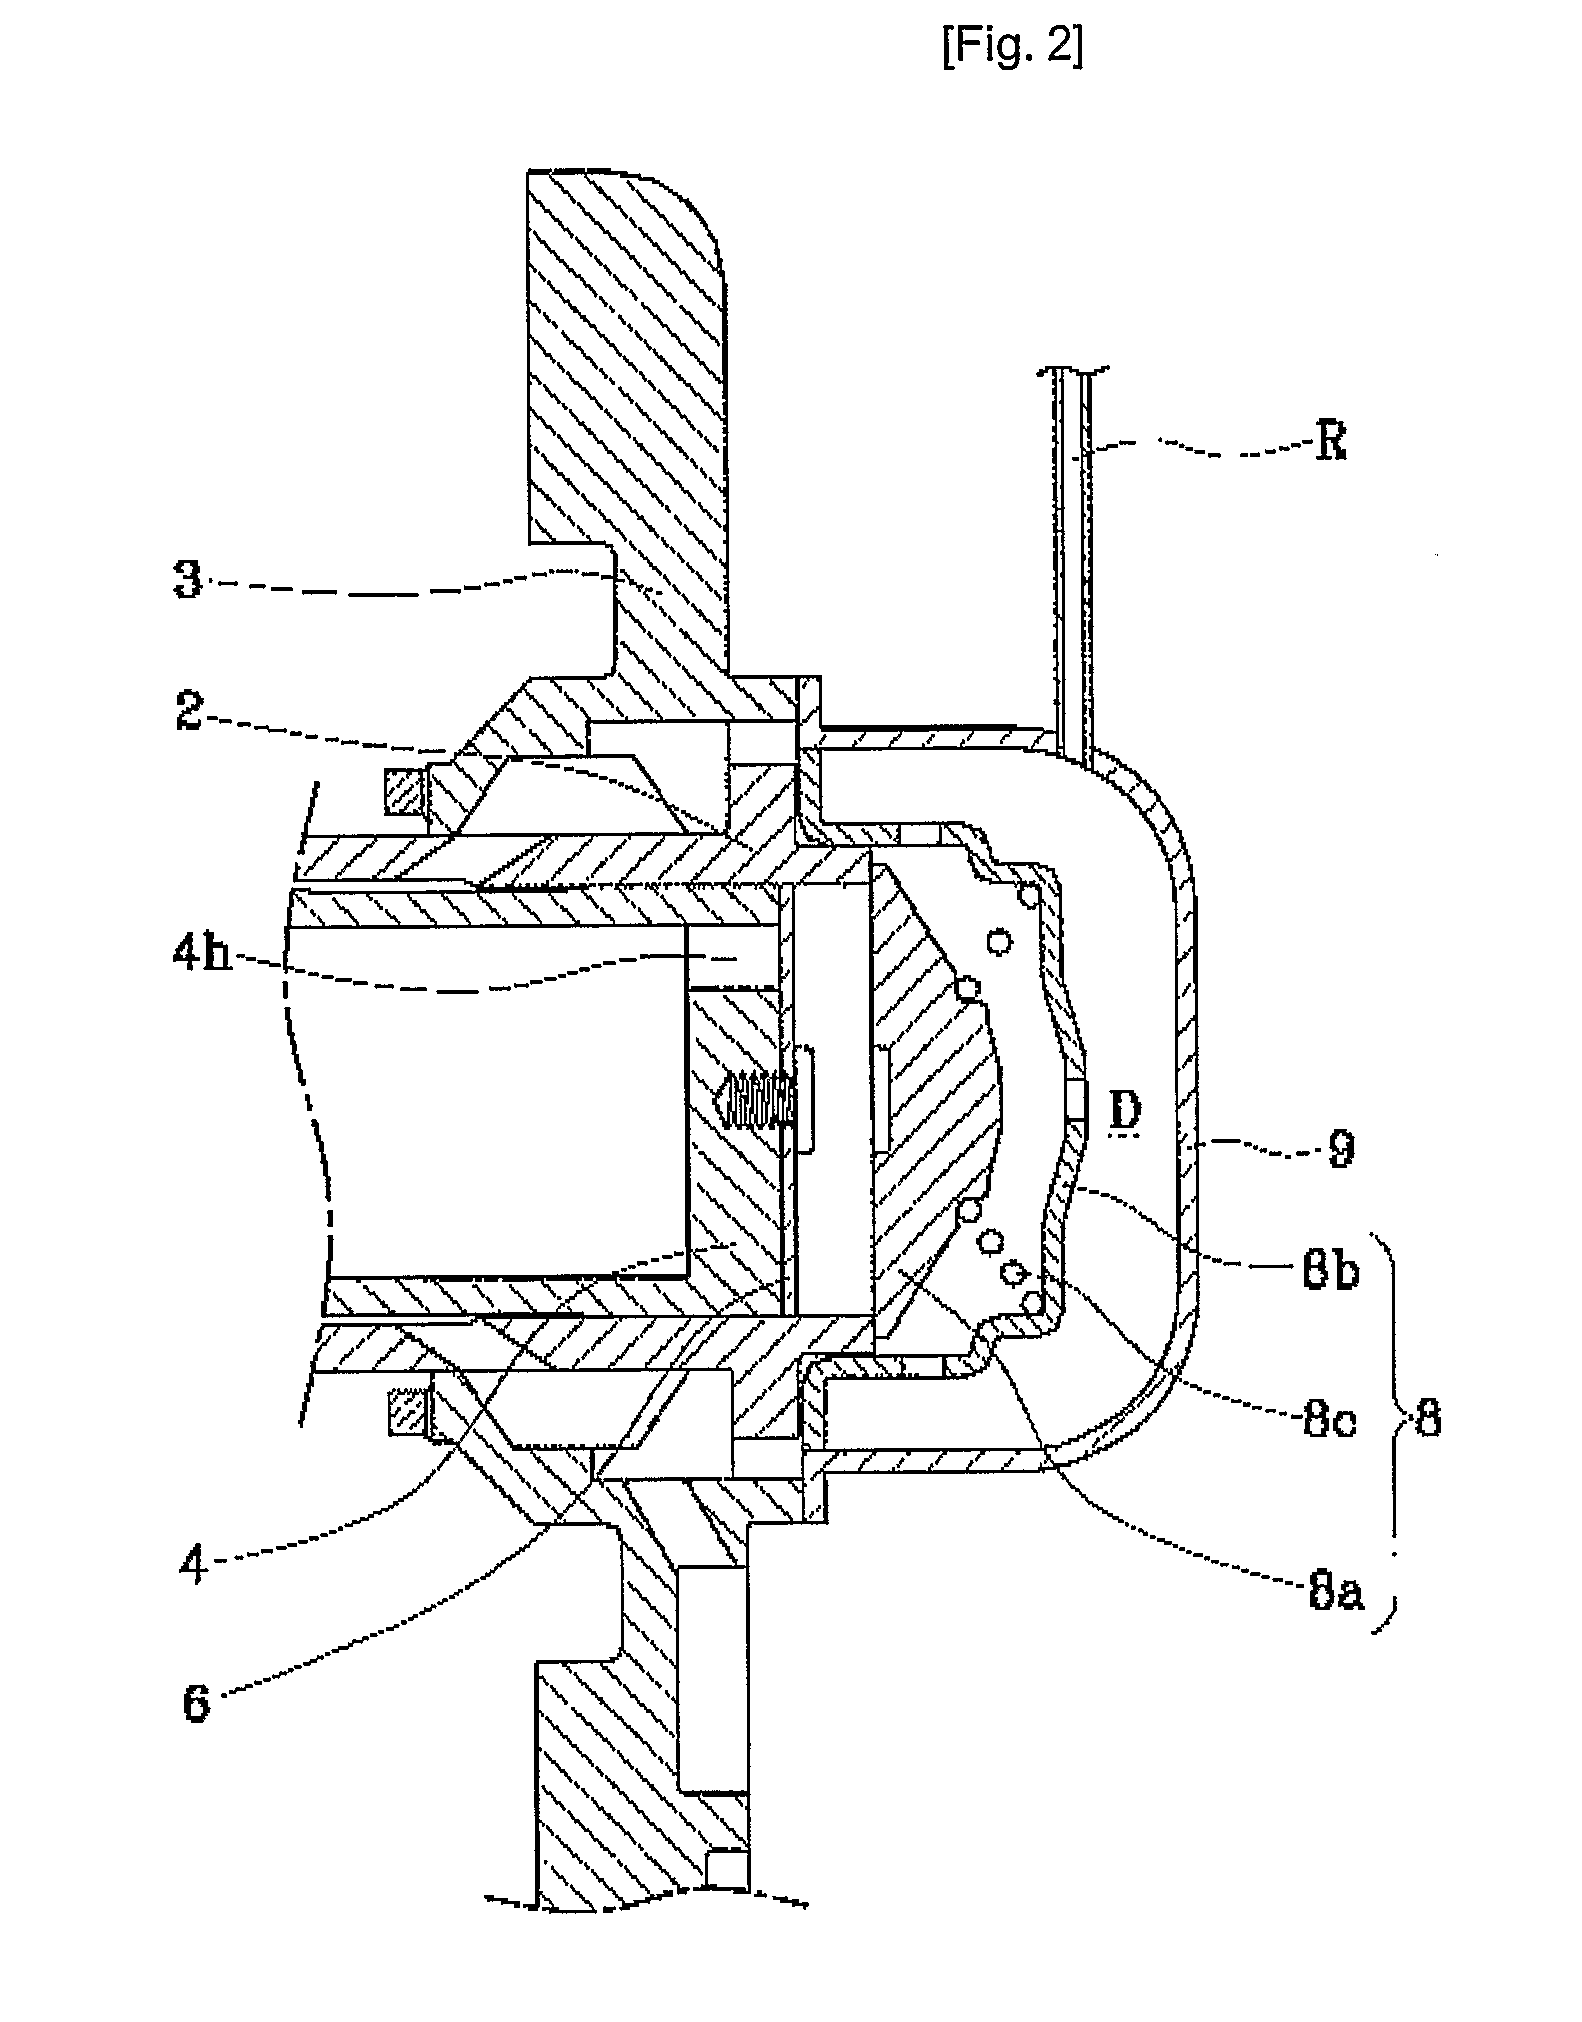 Structure of Discharging Refrigerant For Linear Compressor